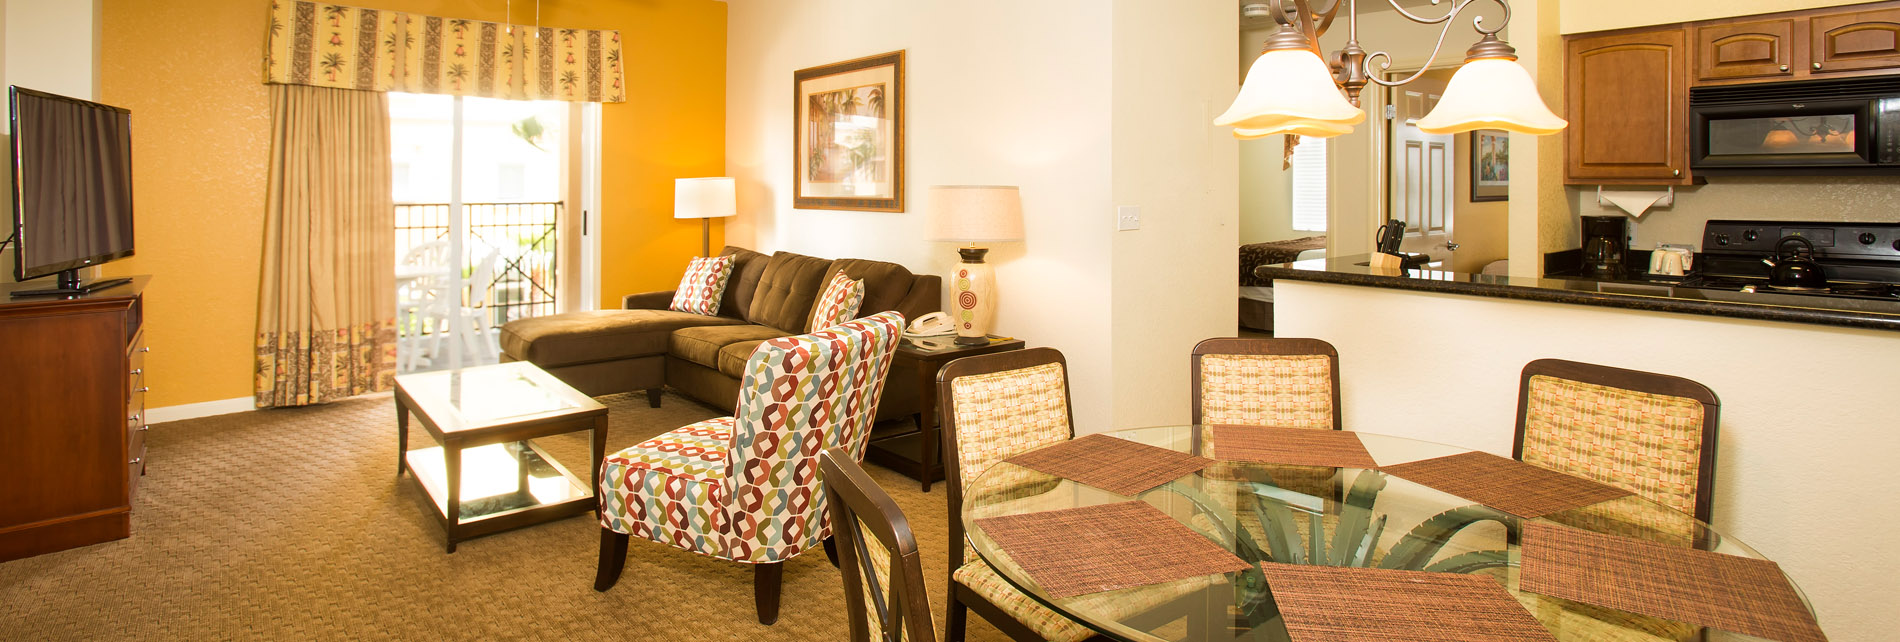 Lake Buena Vista Resort Village & Spa living room and dining area